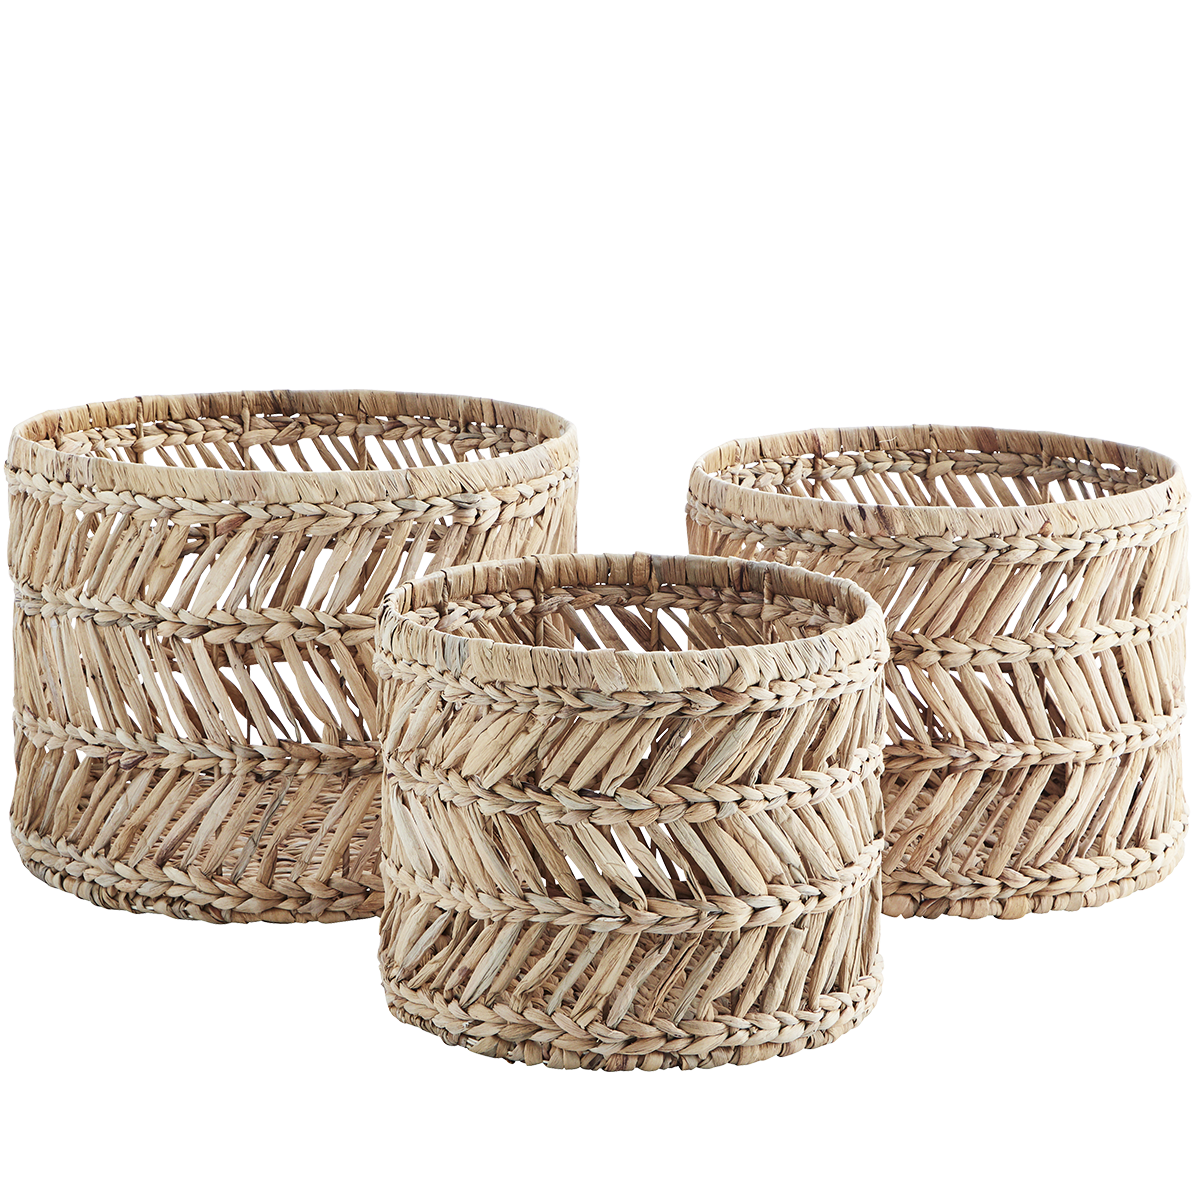 Water hyacinth baskets